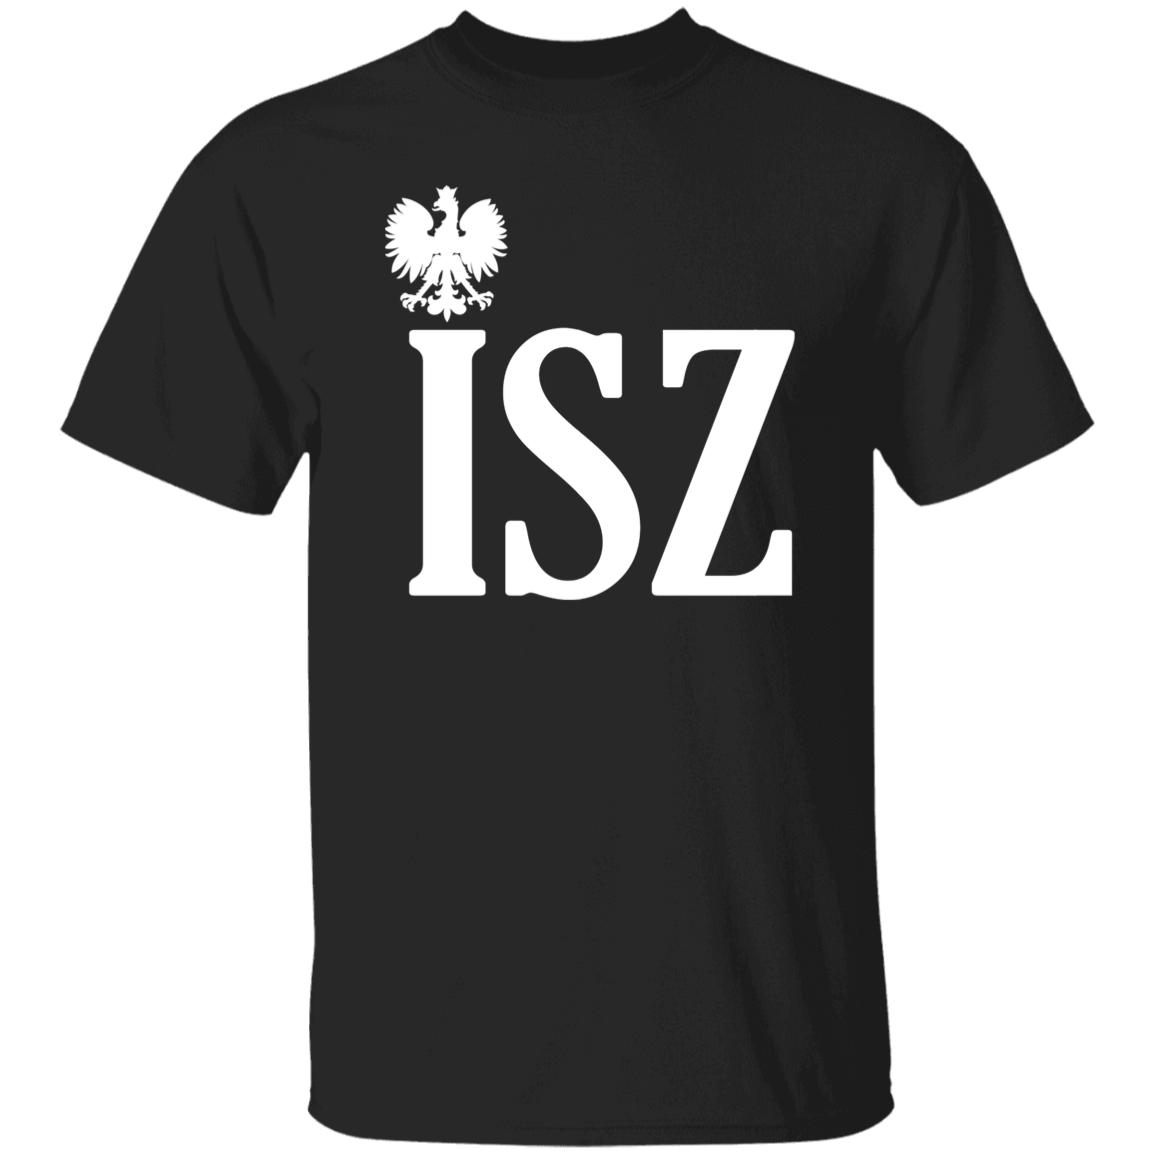 ISZ Polish Surname Ending Apparel CustomCat G500 5.3 oz. T-Shirt Black S